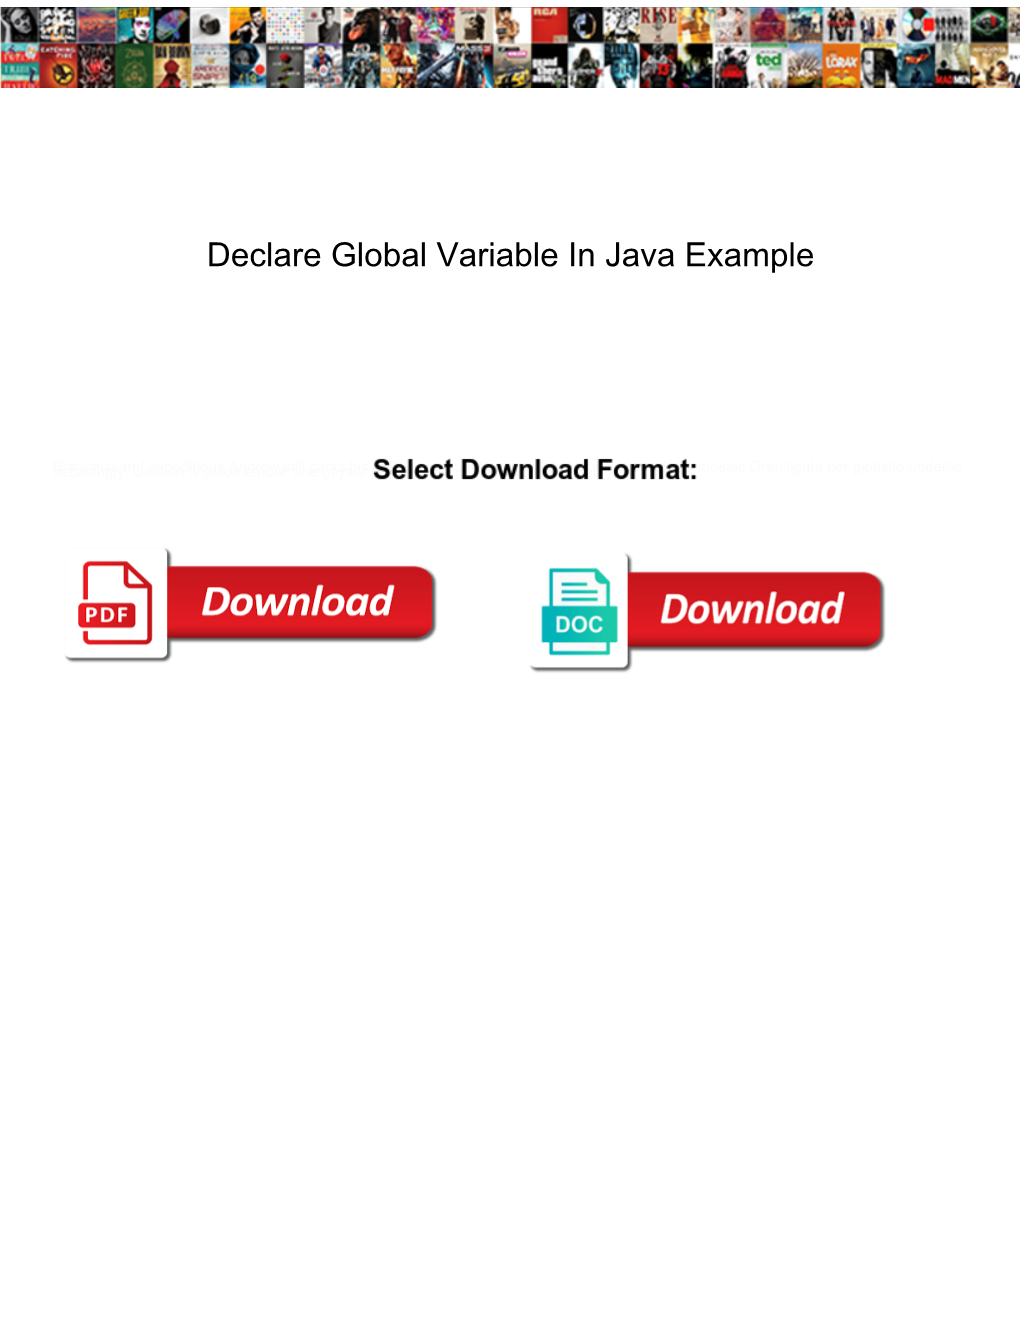 Declare Global Variable in Java Example